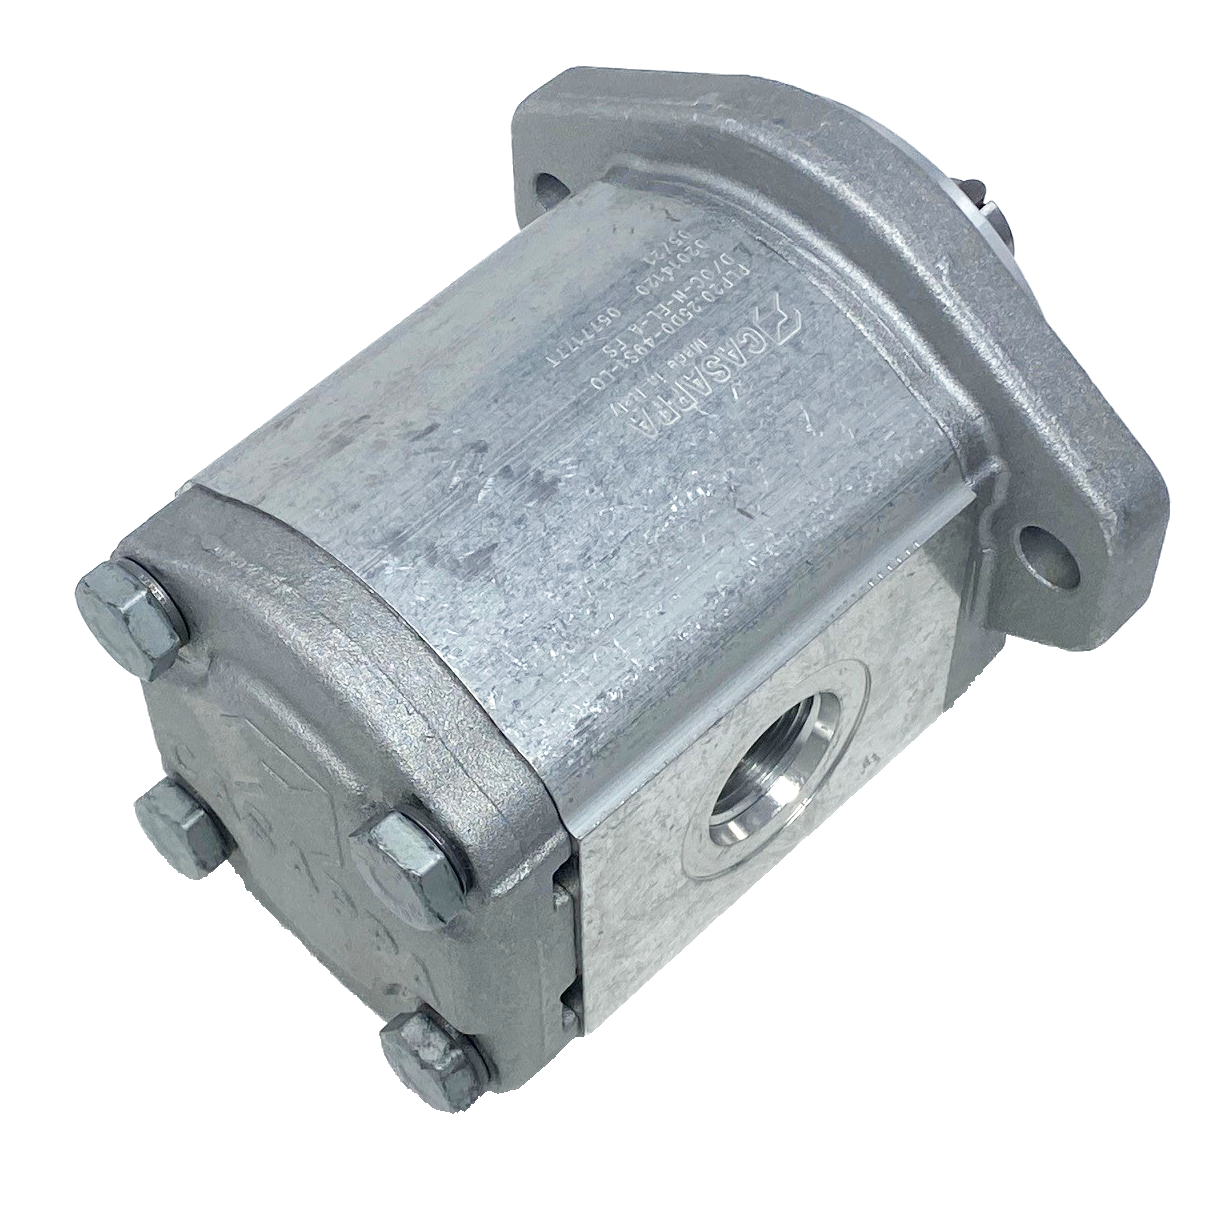 PLM20.25R0-50S1-LOC/OD-N-EL : Casappa Polaris Gear Motor, 26.42cc, 2465psi Rated, 3045RPM, Reversible Rear External Drain, 3/4" Bore x 3/16" Key Shaft, SAE A 2-Bolt Flange, 0.625 (5/8") #10 SAE Inlet, 0.75 (3/4") #12 SAE Outlet, Aluminum Body & Flange